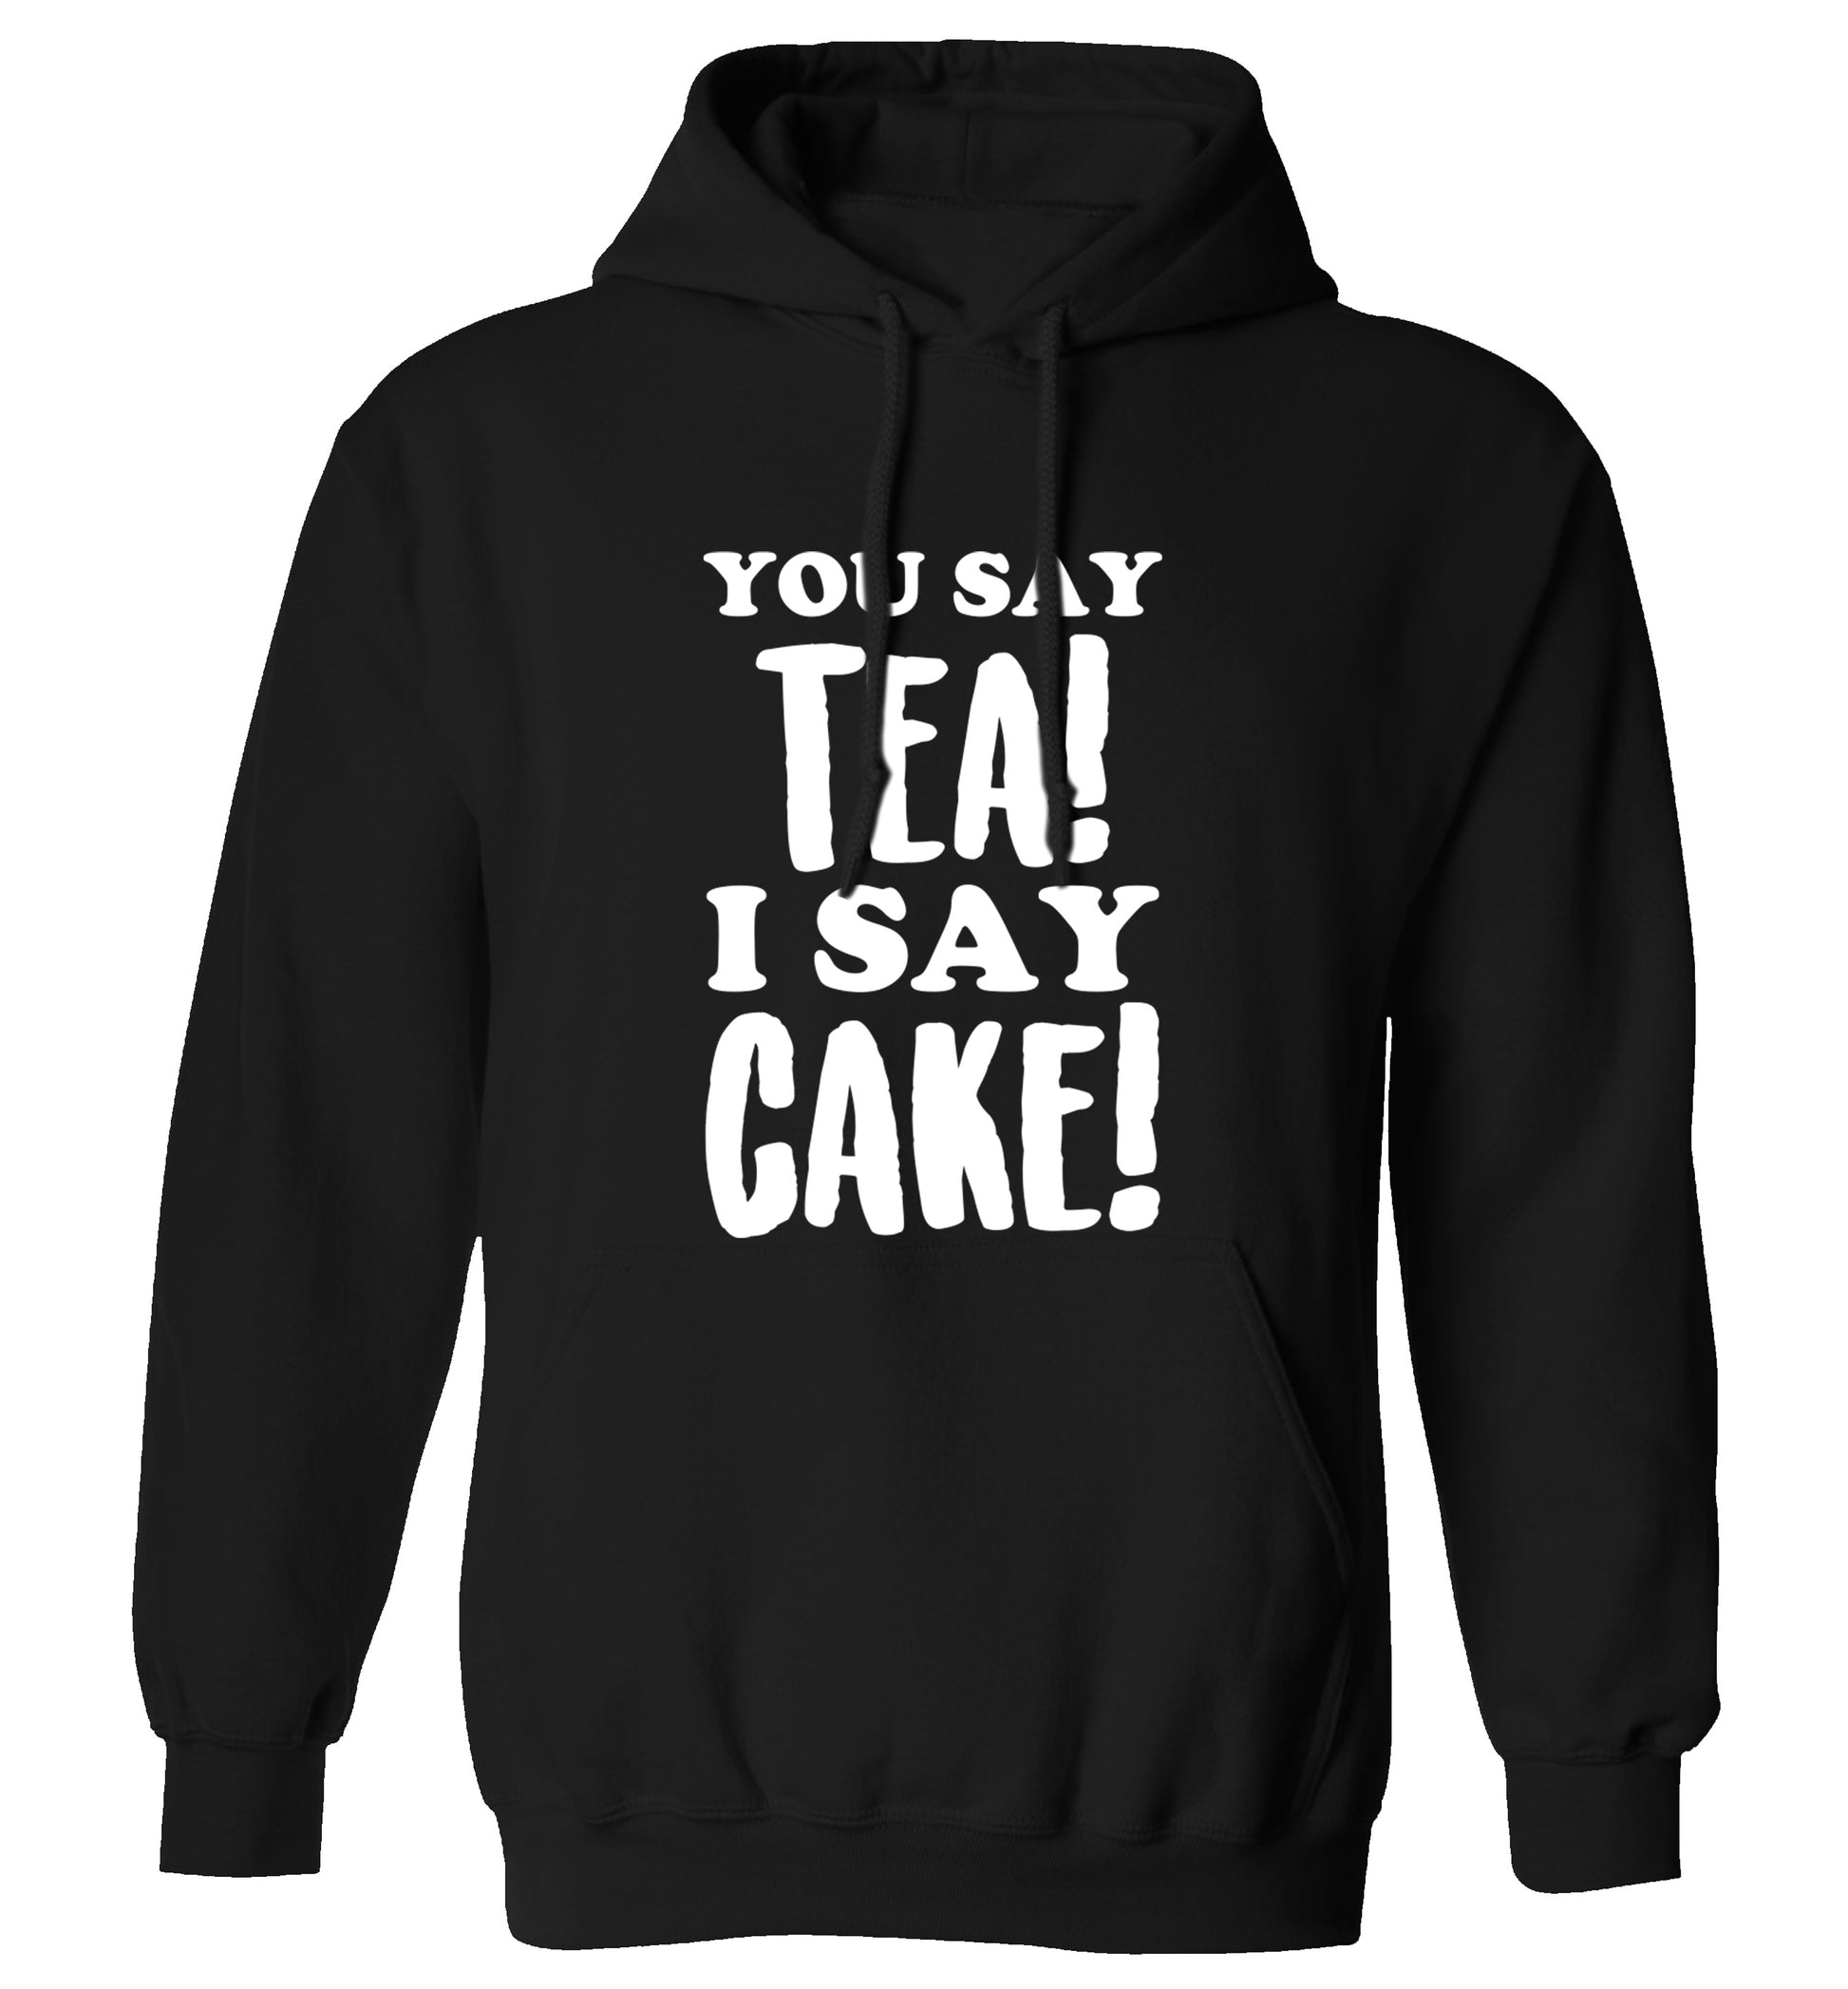 You say tea I say cake! adults unisex black hoodie 2XL